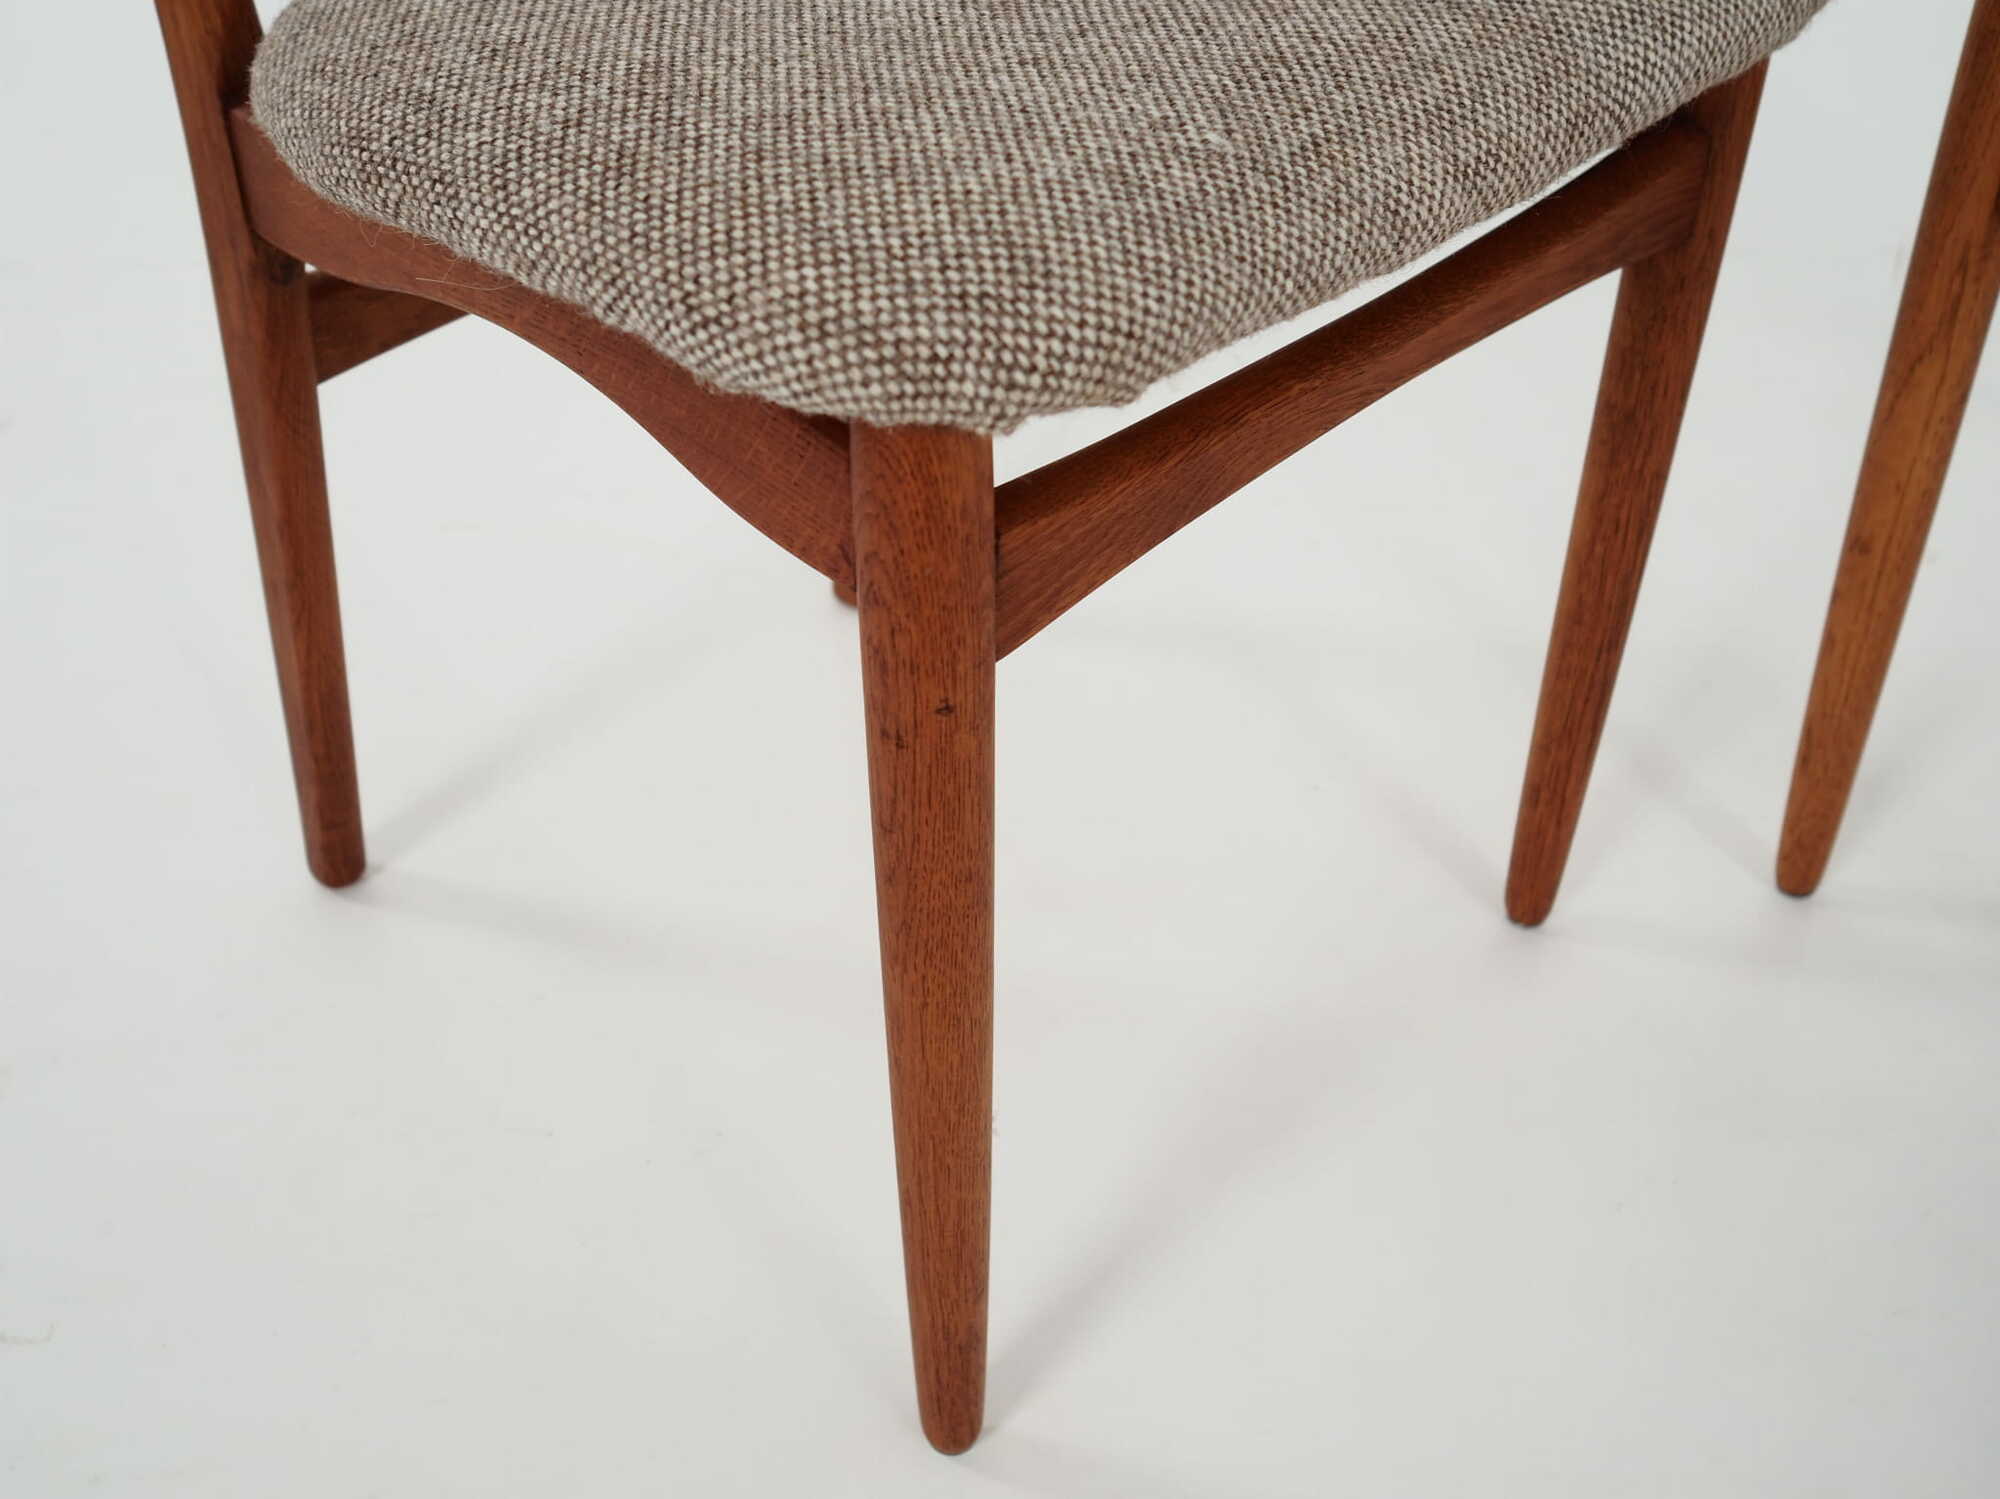 2x Vintage Stuhl Teakholz Textil Braun 1970er Jahre 6